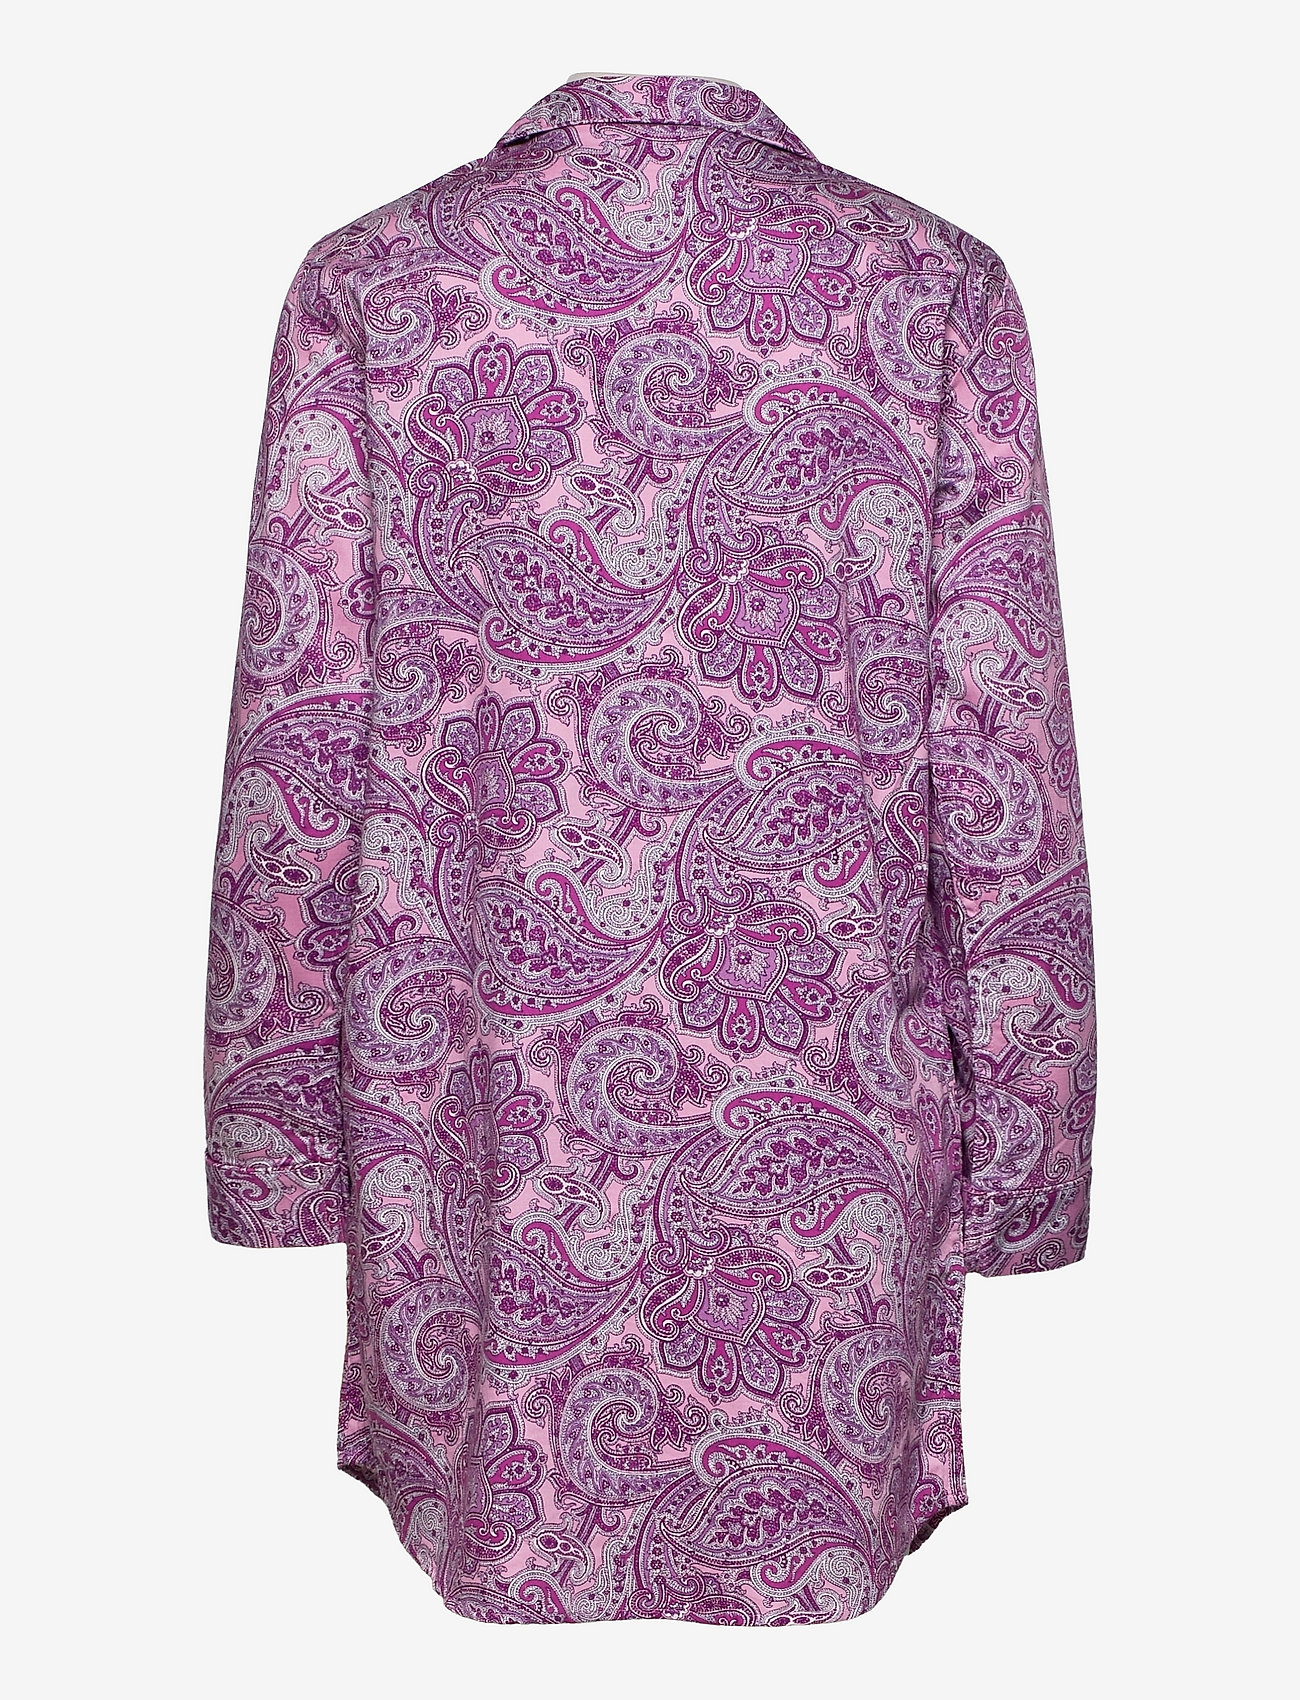 Lauren Ralph Lauren Homewear - LRL   L/S  SLEEPSHIRT PURPLE PT - Överdelar - purple pt - 1